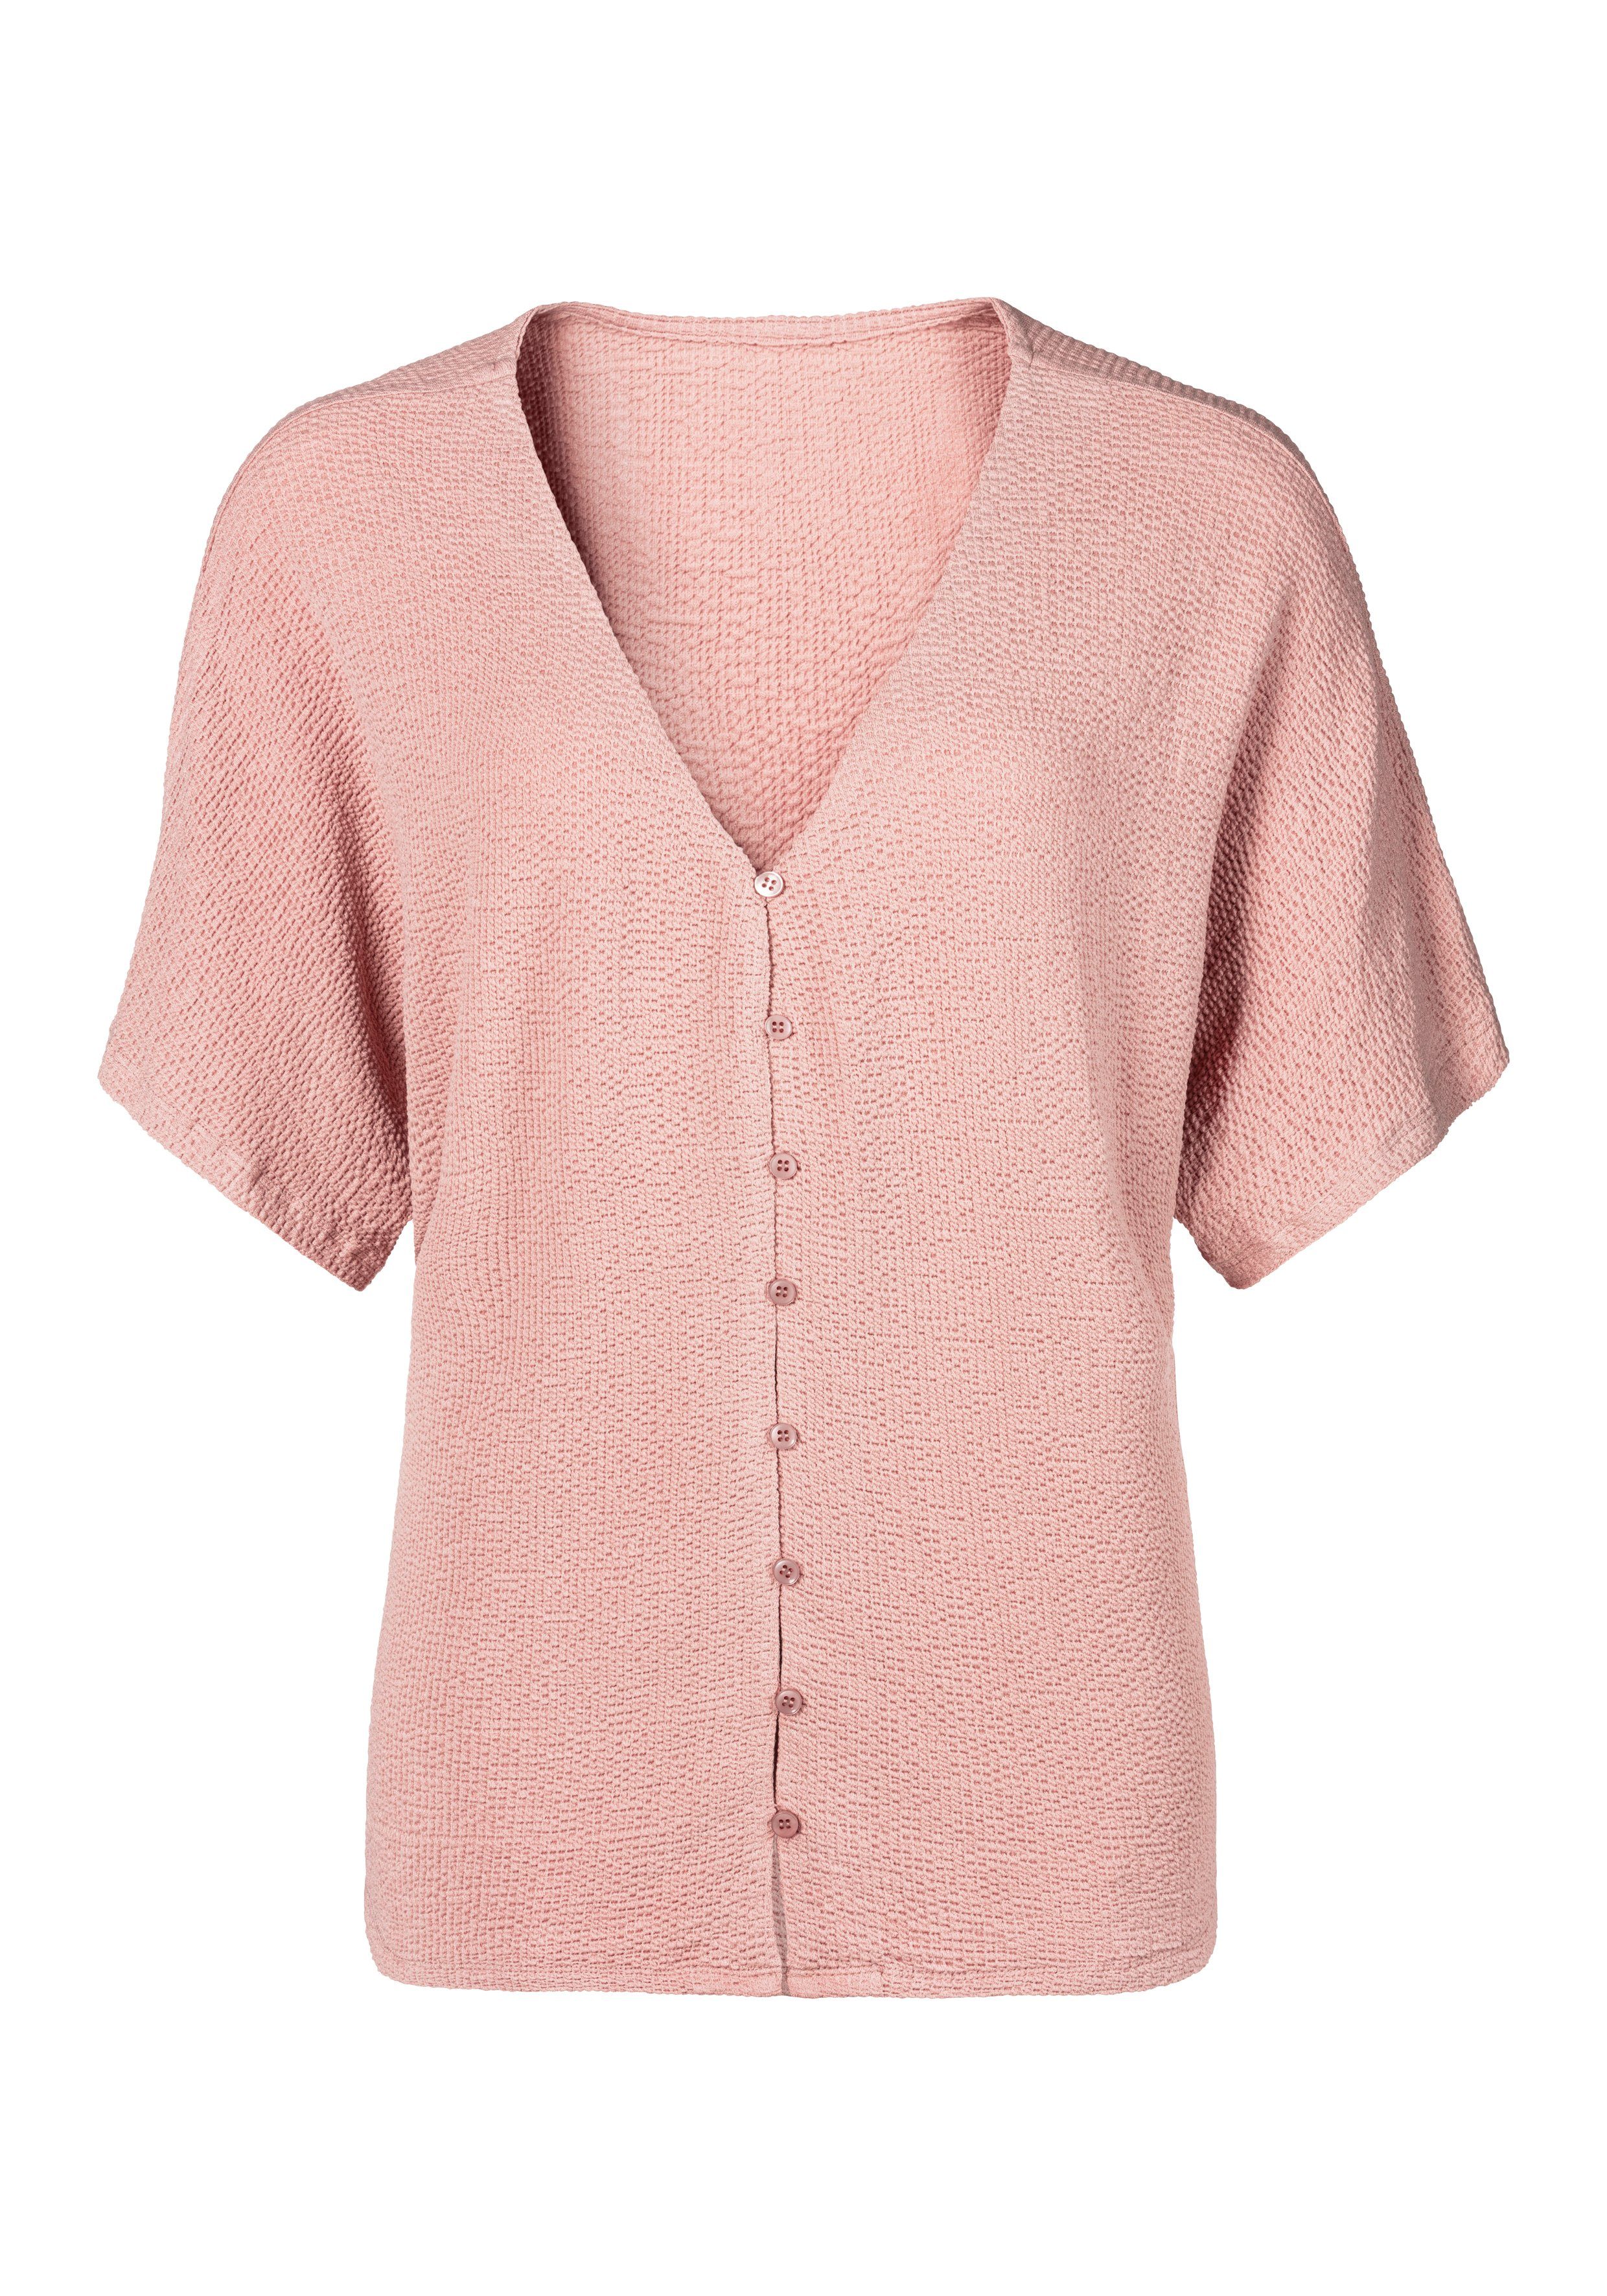 LASCANA T-Shirt Ware aus rosé strukturierter